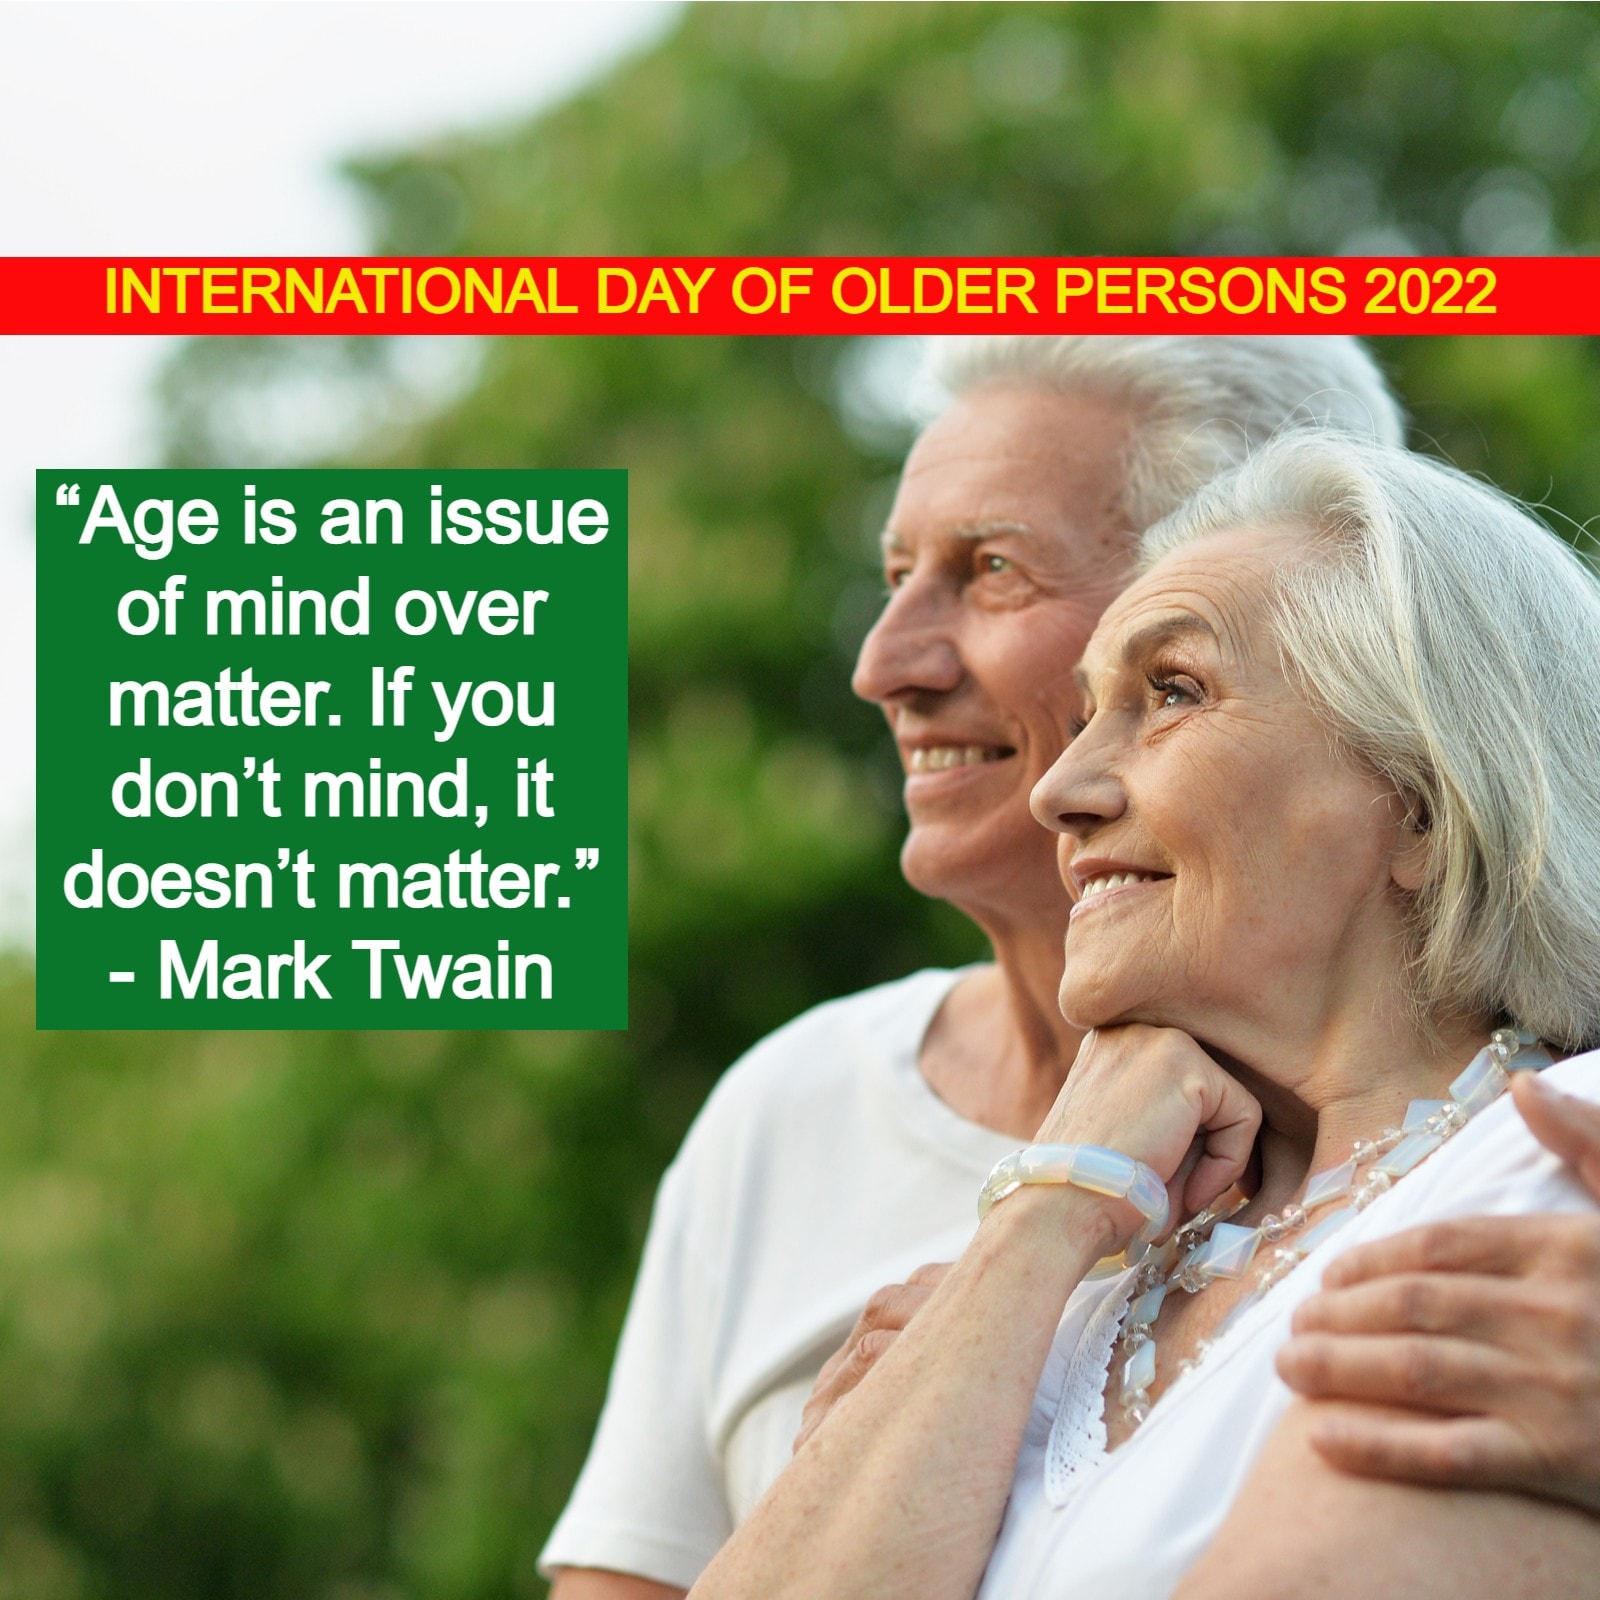 World Senior Citizen's Day 2022: Date, history, significance